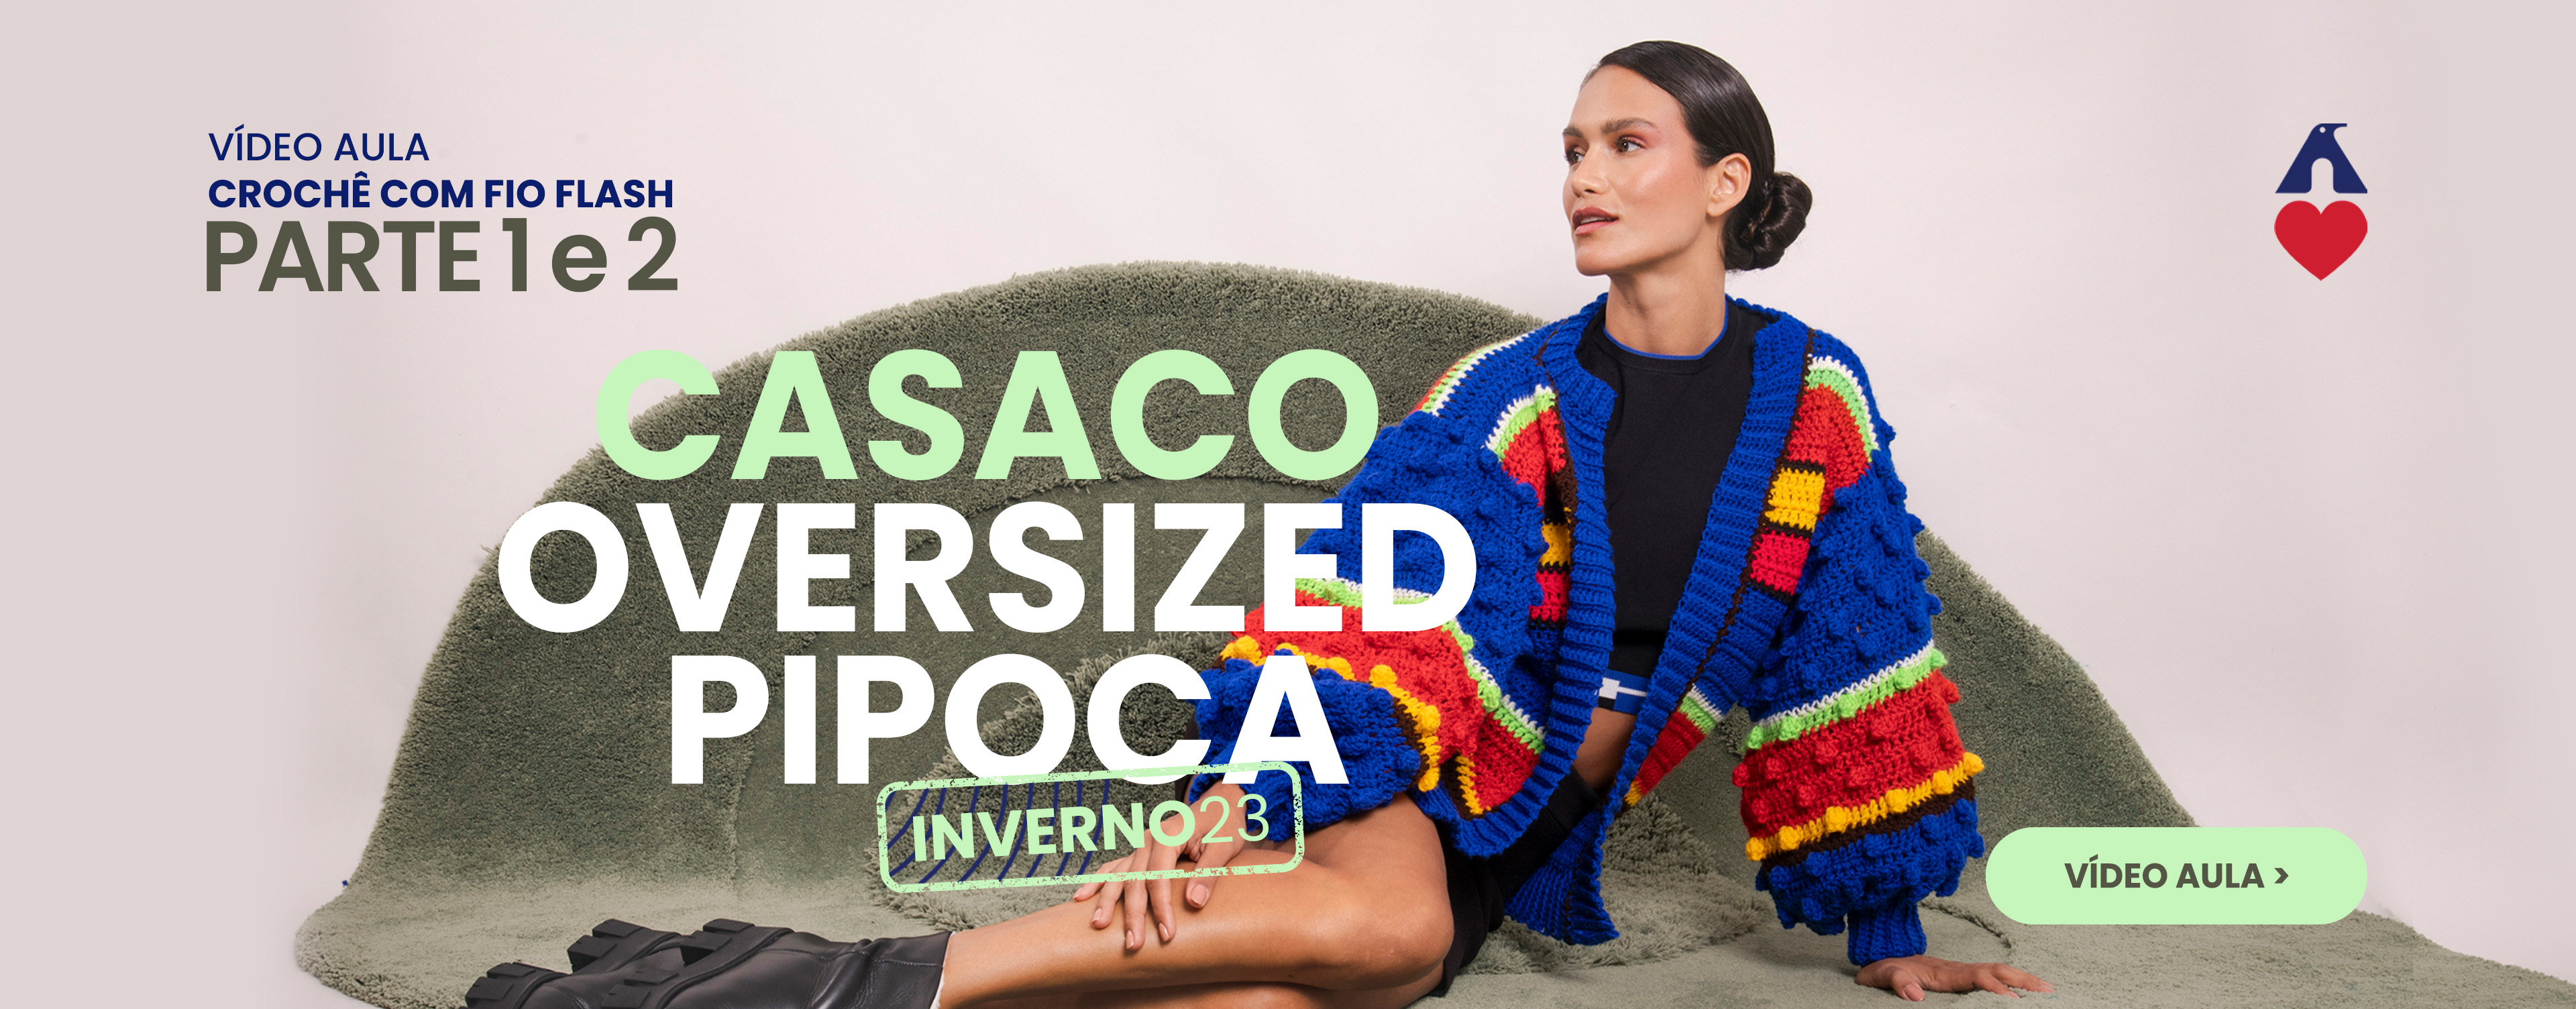 Video aula Casaco Oversized Pipoca